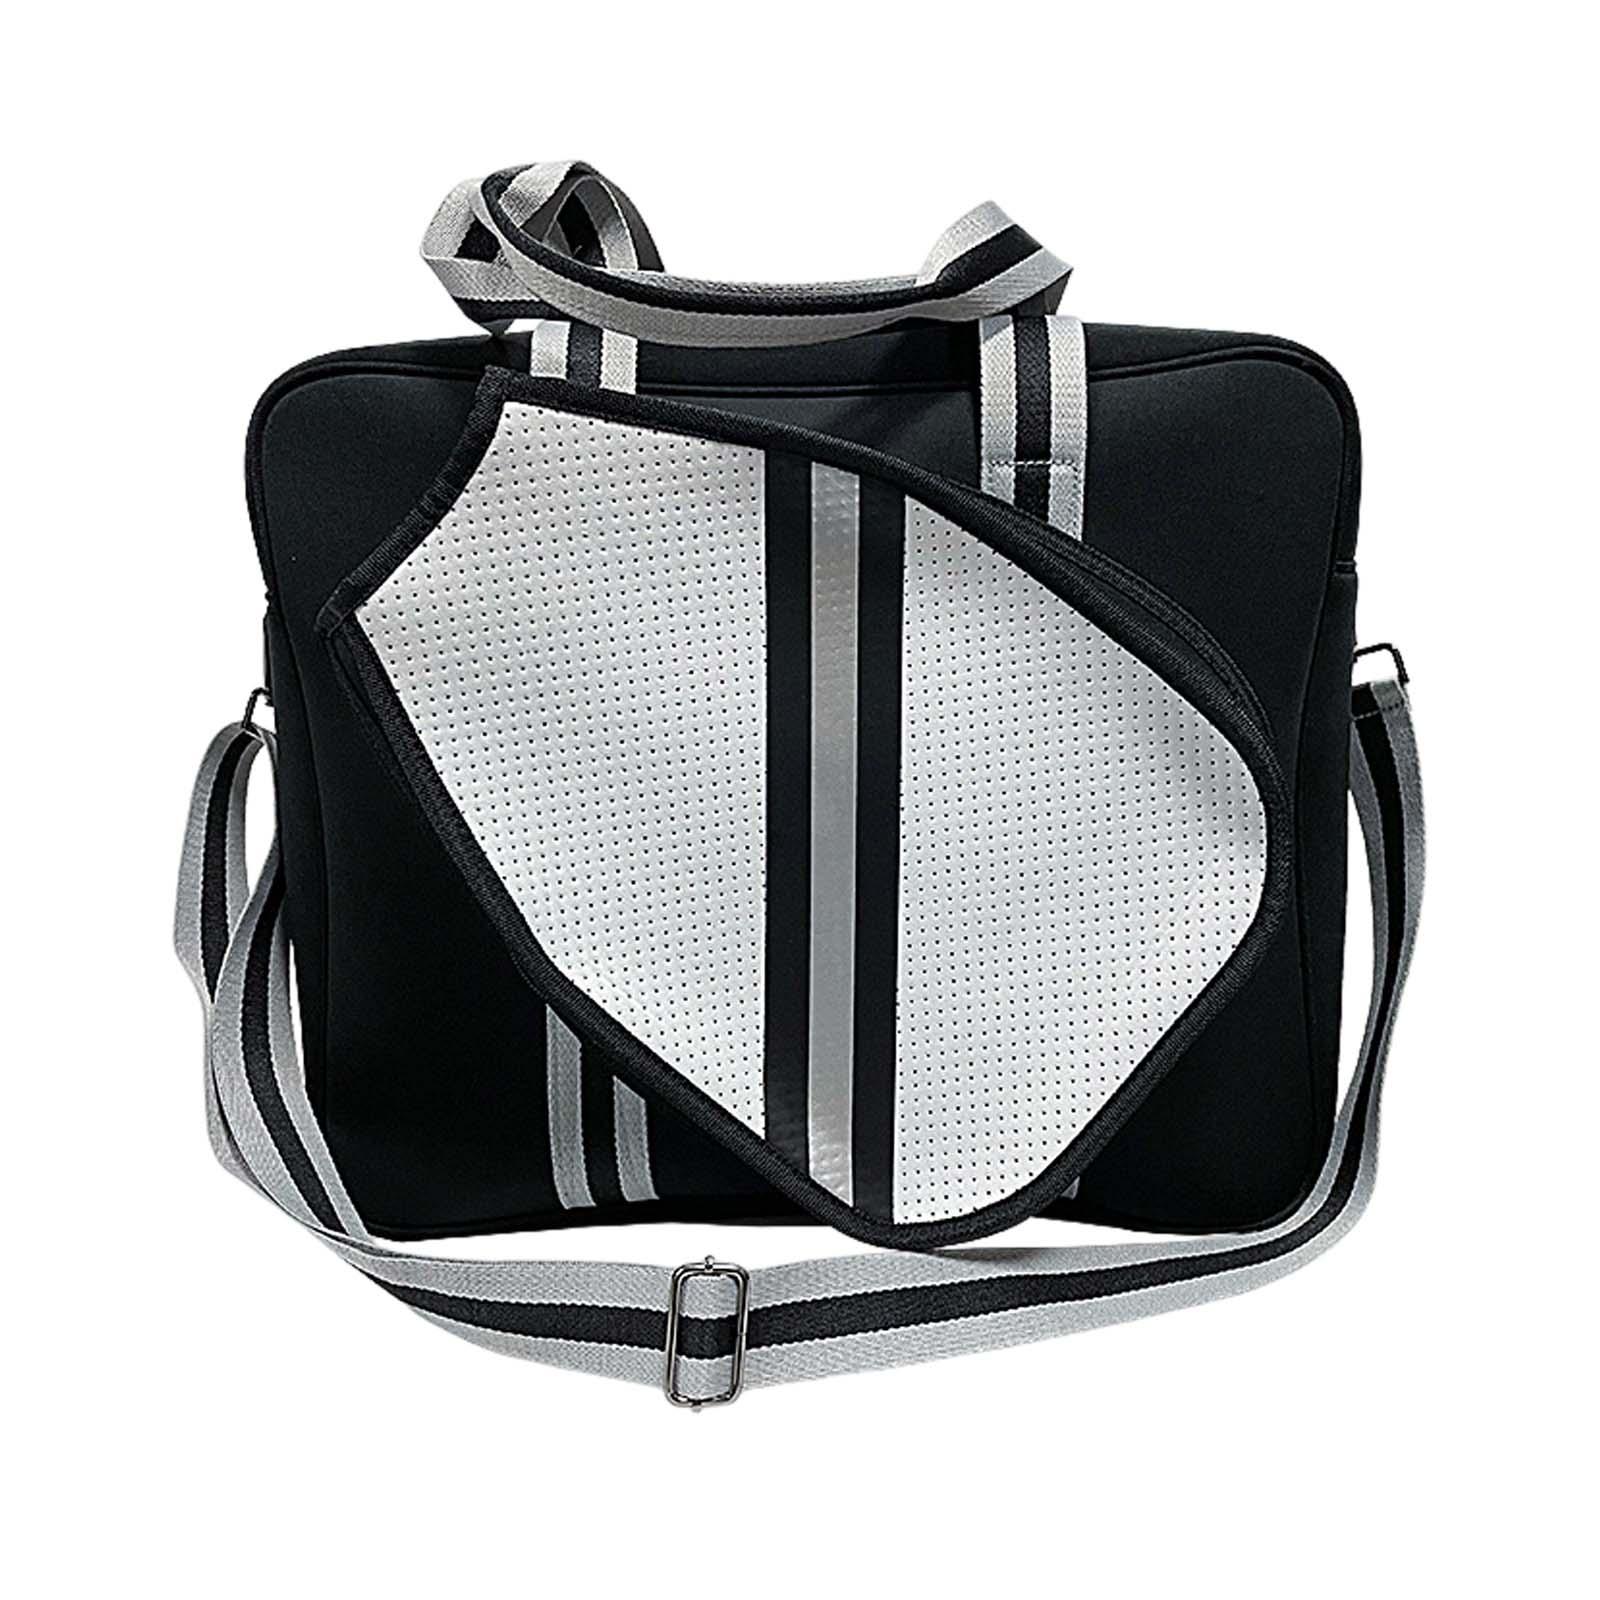 Badminton Bag Carrying Bag Racquet Covers Multifunctional Outdoor Tennis Bag style D